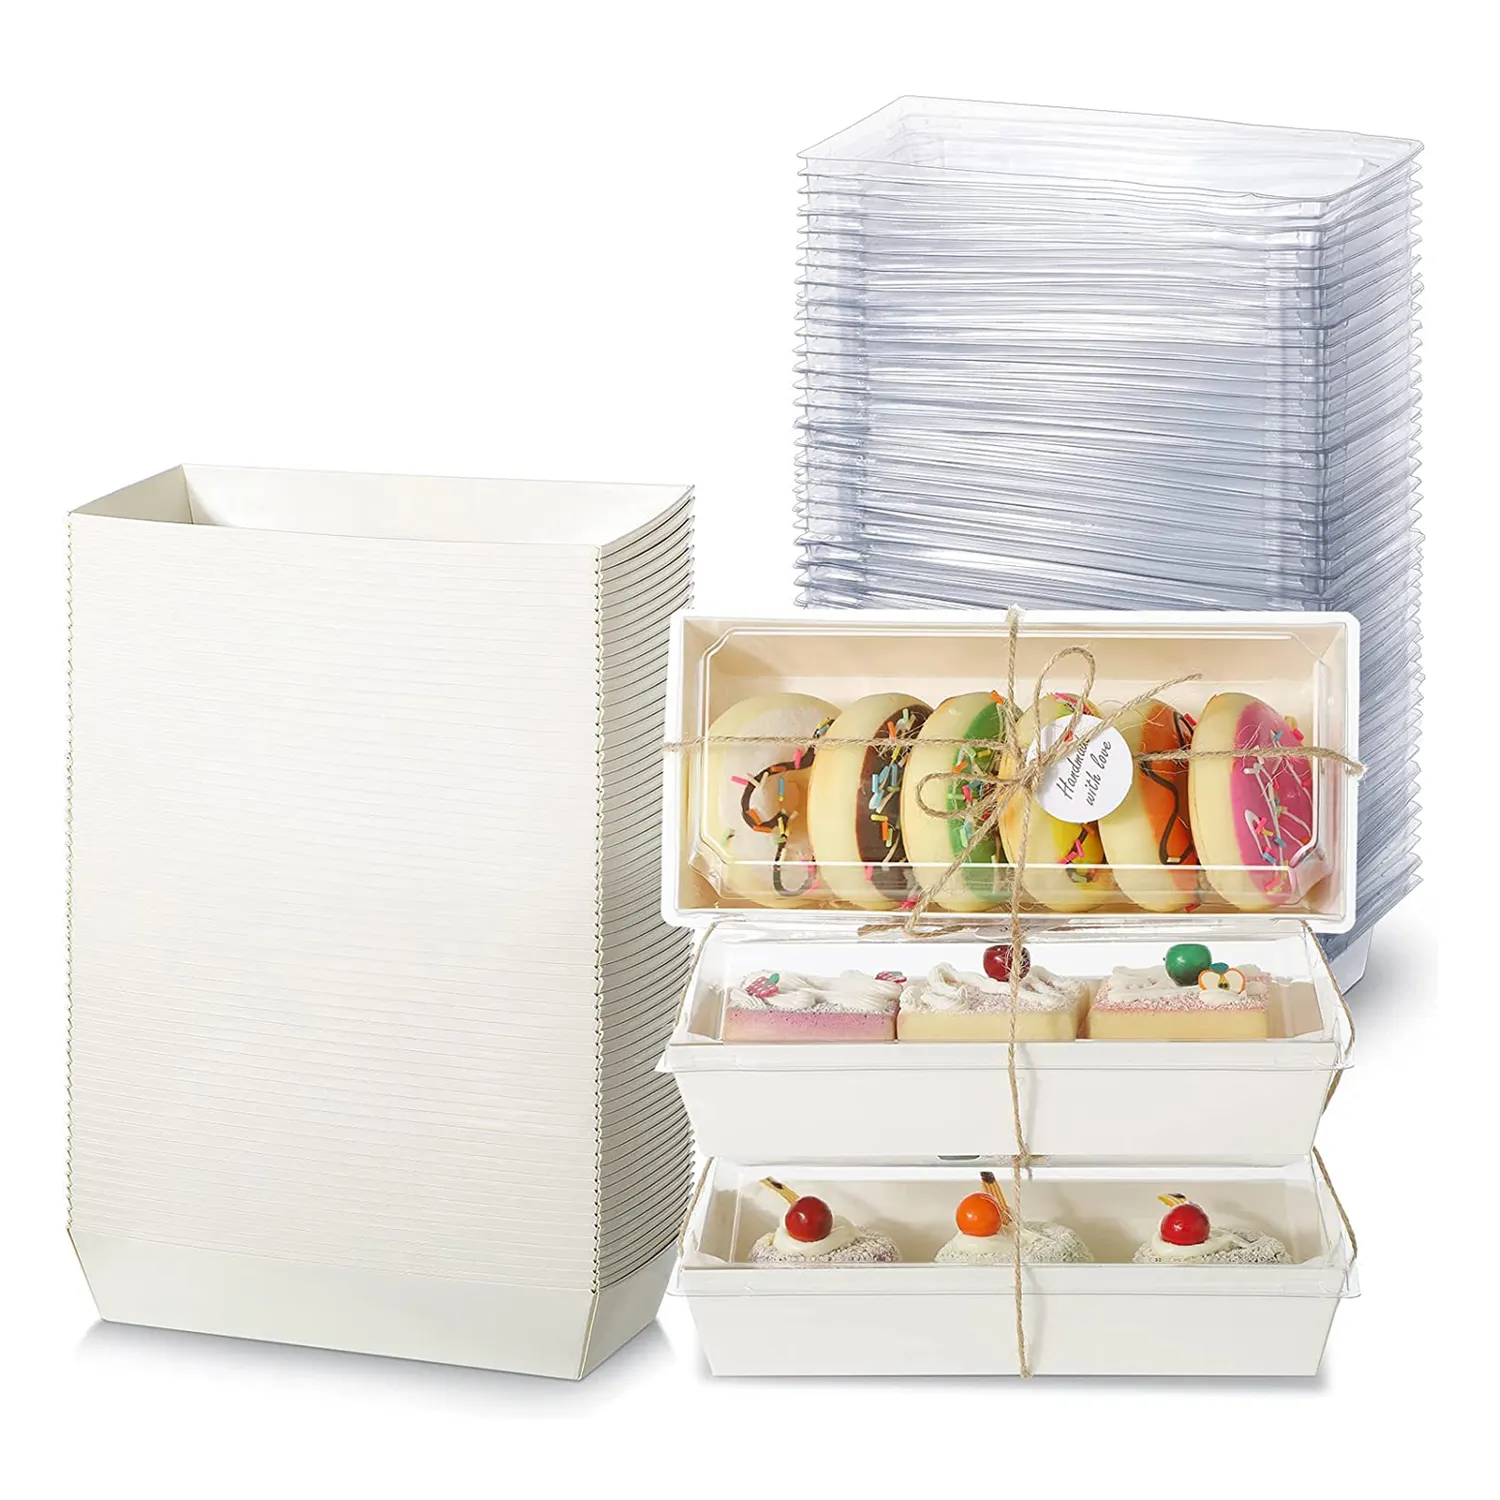 50 pak 3.3x6 inci kertas persegi panjang kotak wadah makanan sekali pakai untuk Swiss Roll, Sandwich, stroberi, potongan kue dengan tutup bening